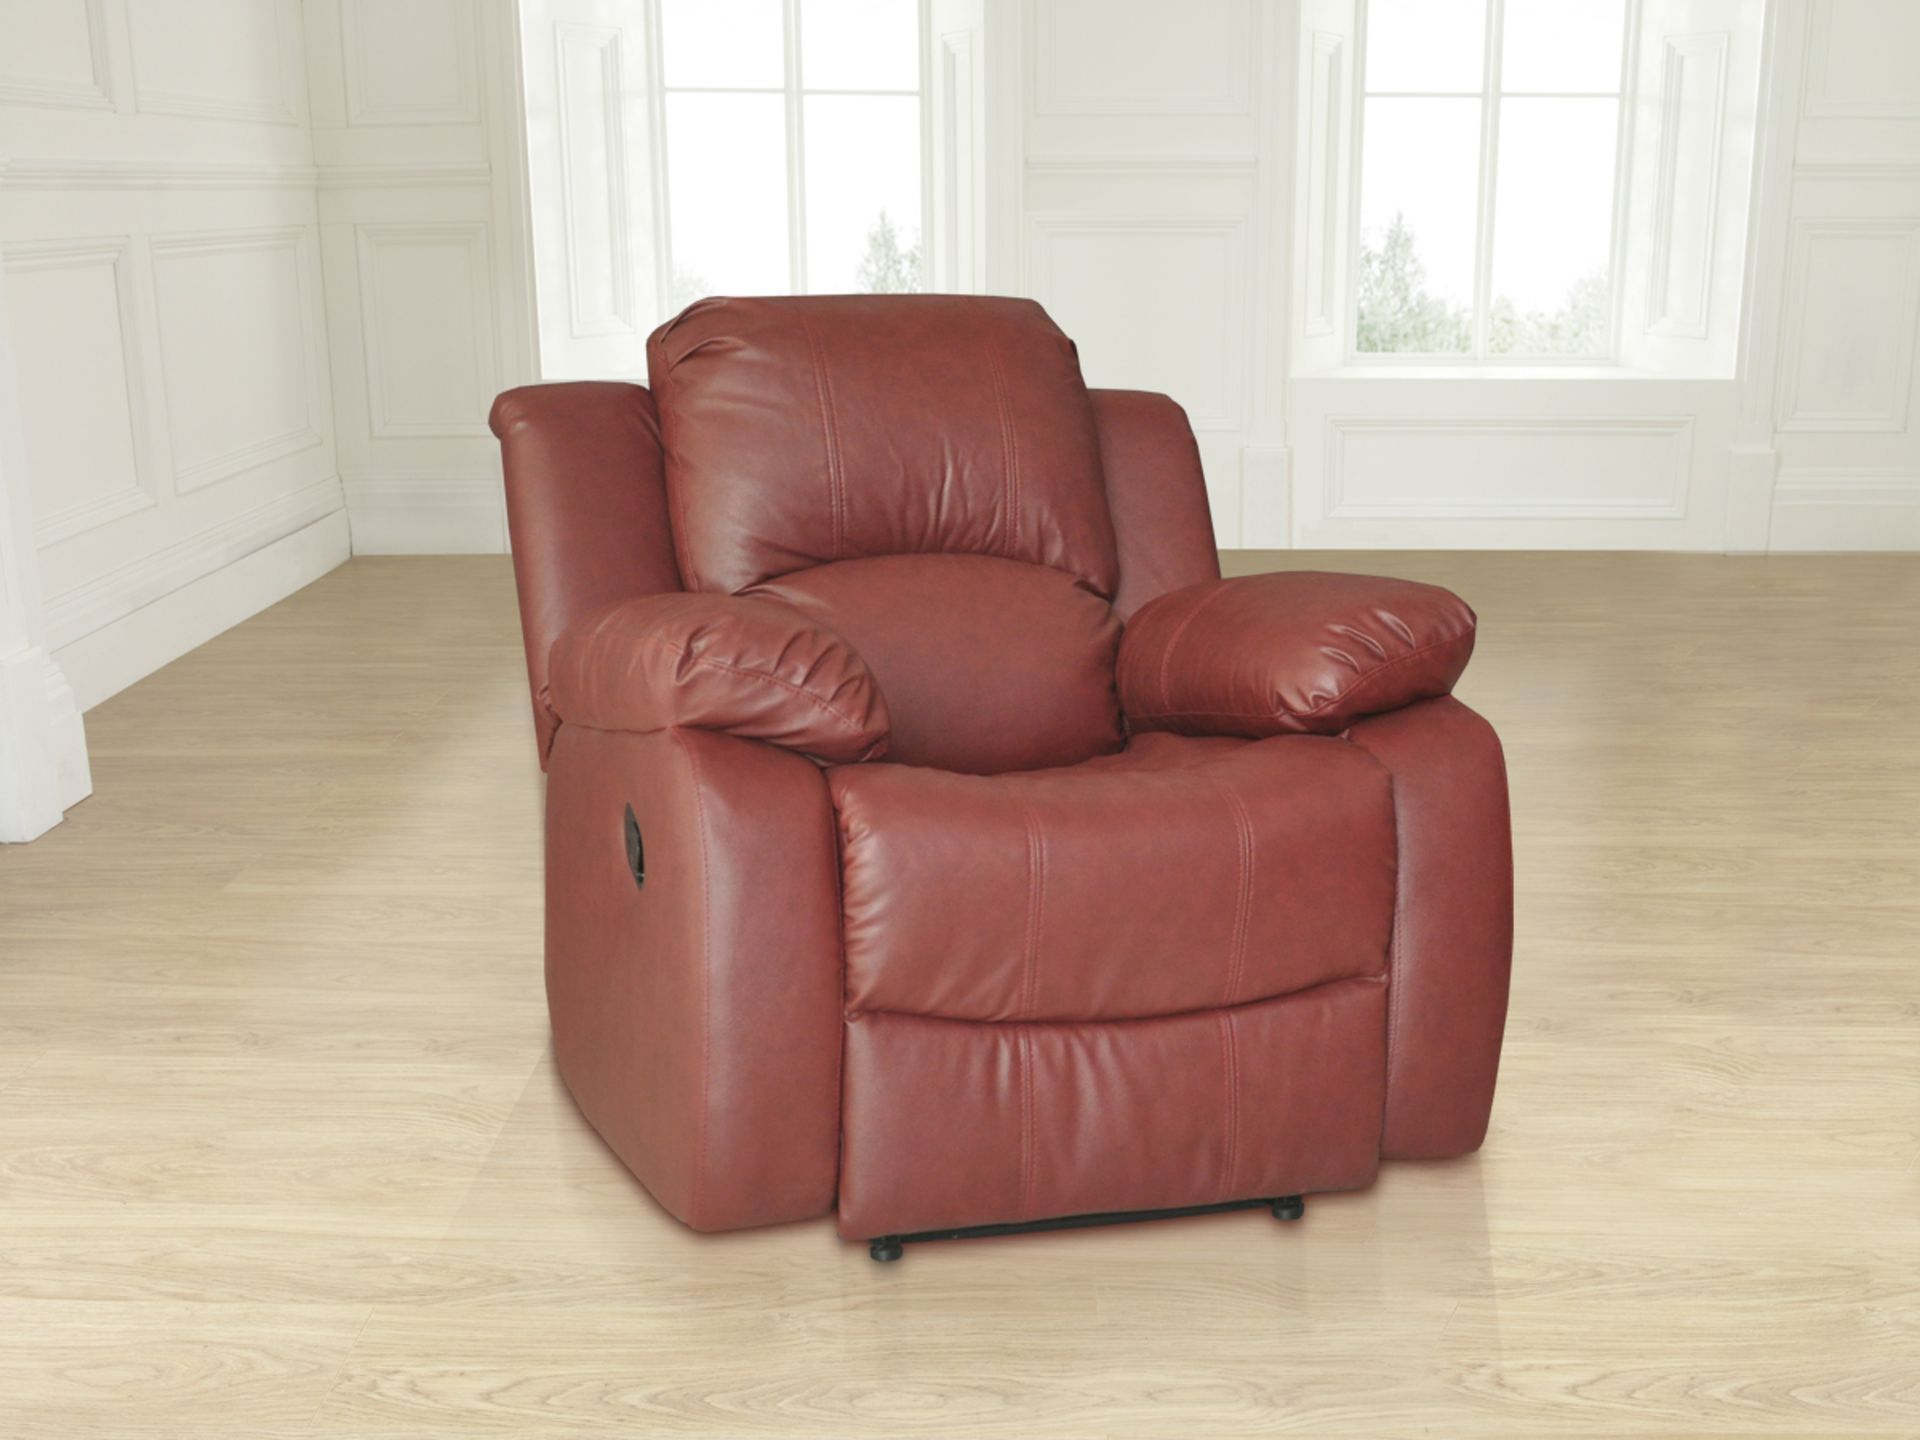 Supreme Valance burgandy leather 2 seater reclining sofa - Image 2 of 3